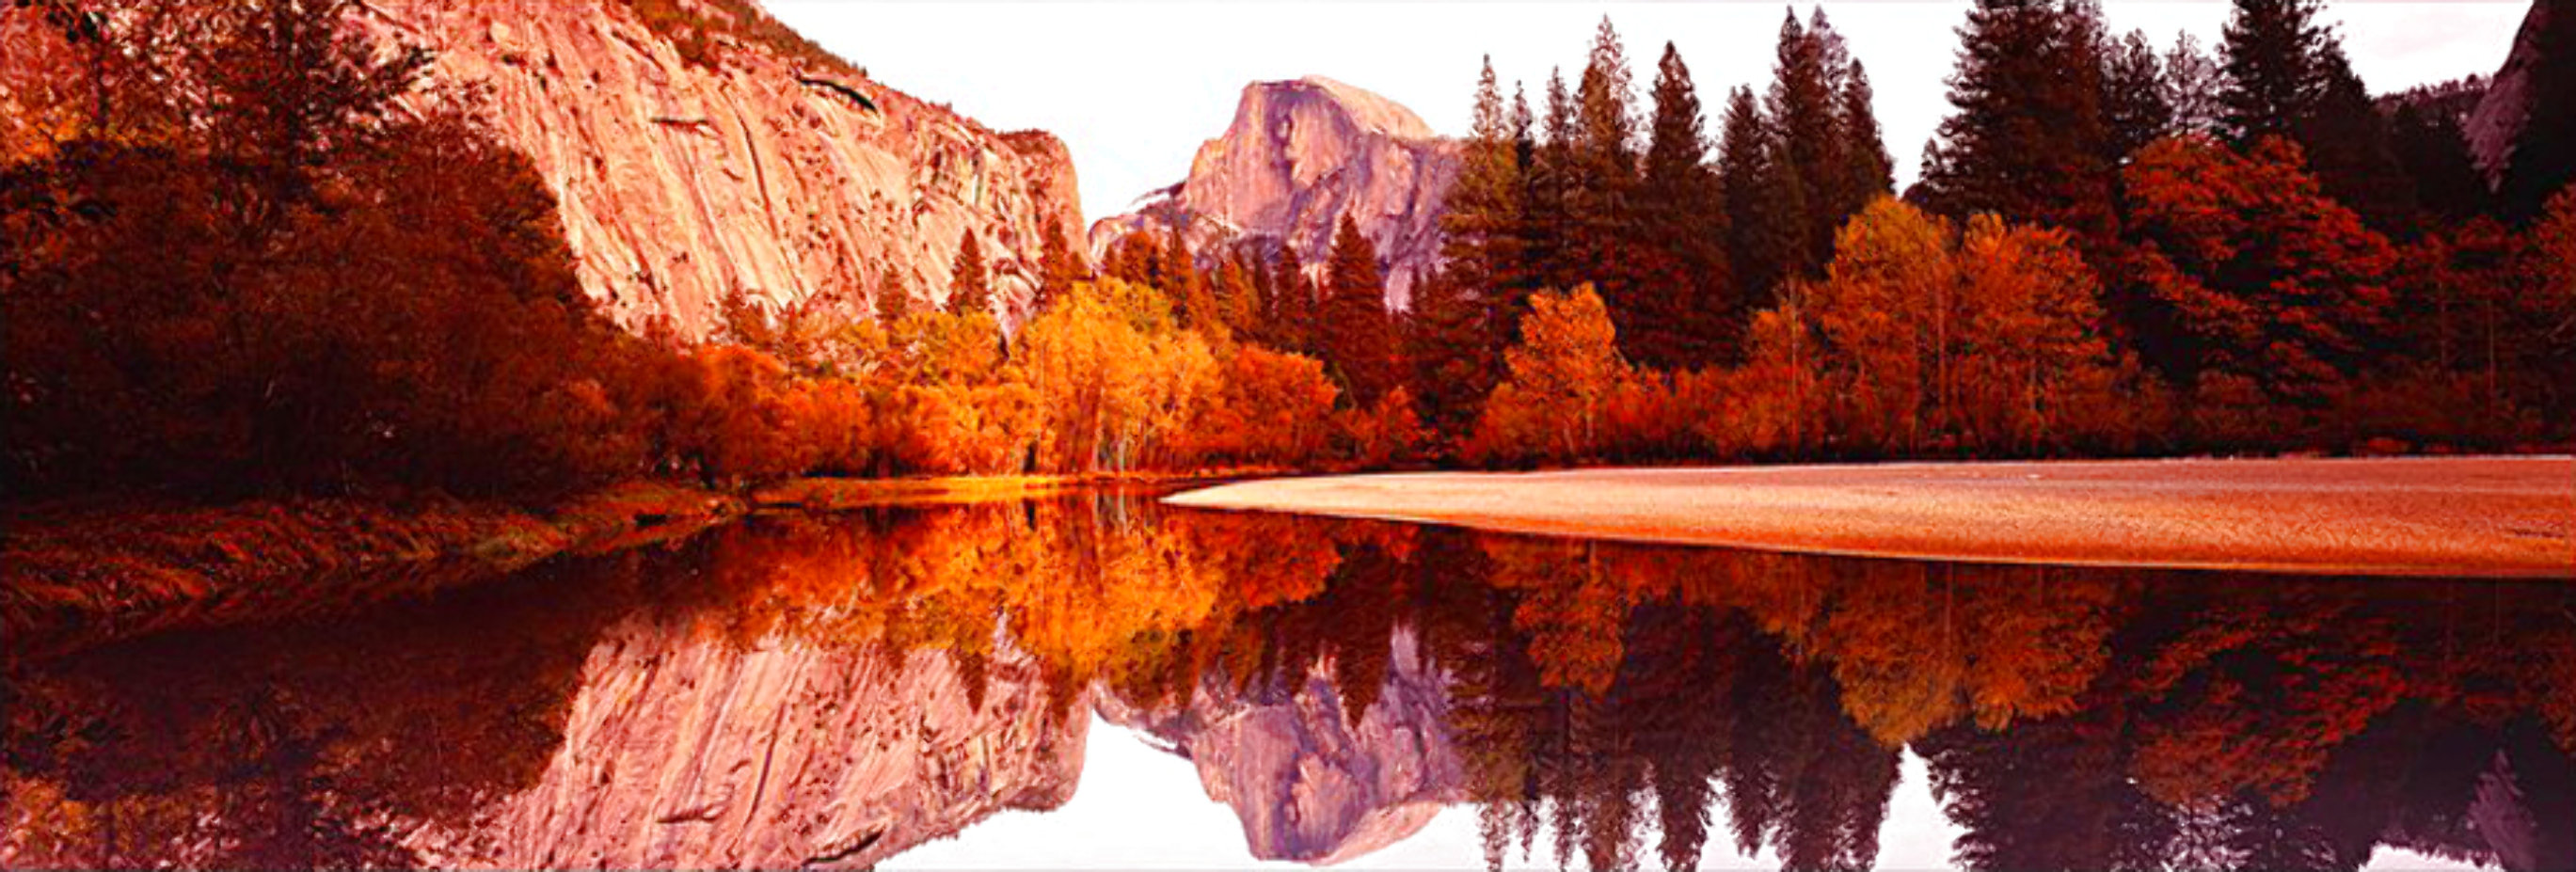 Yosemite Reflections 2M Huge - California  Panorama by Peter Lik